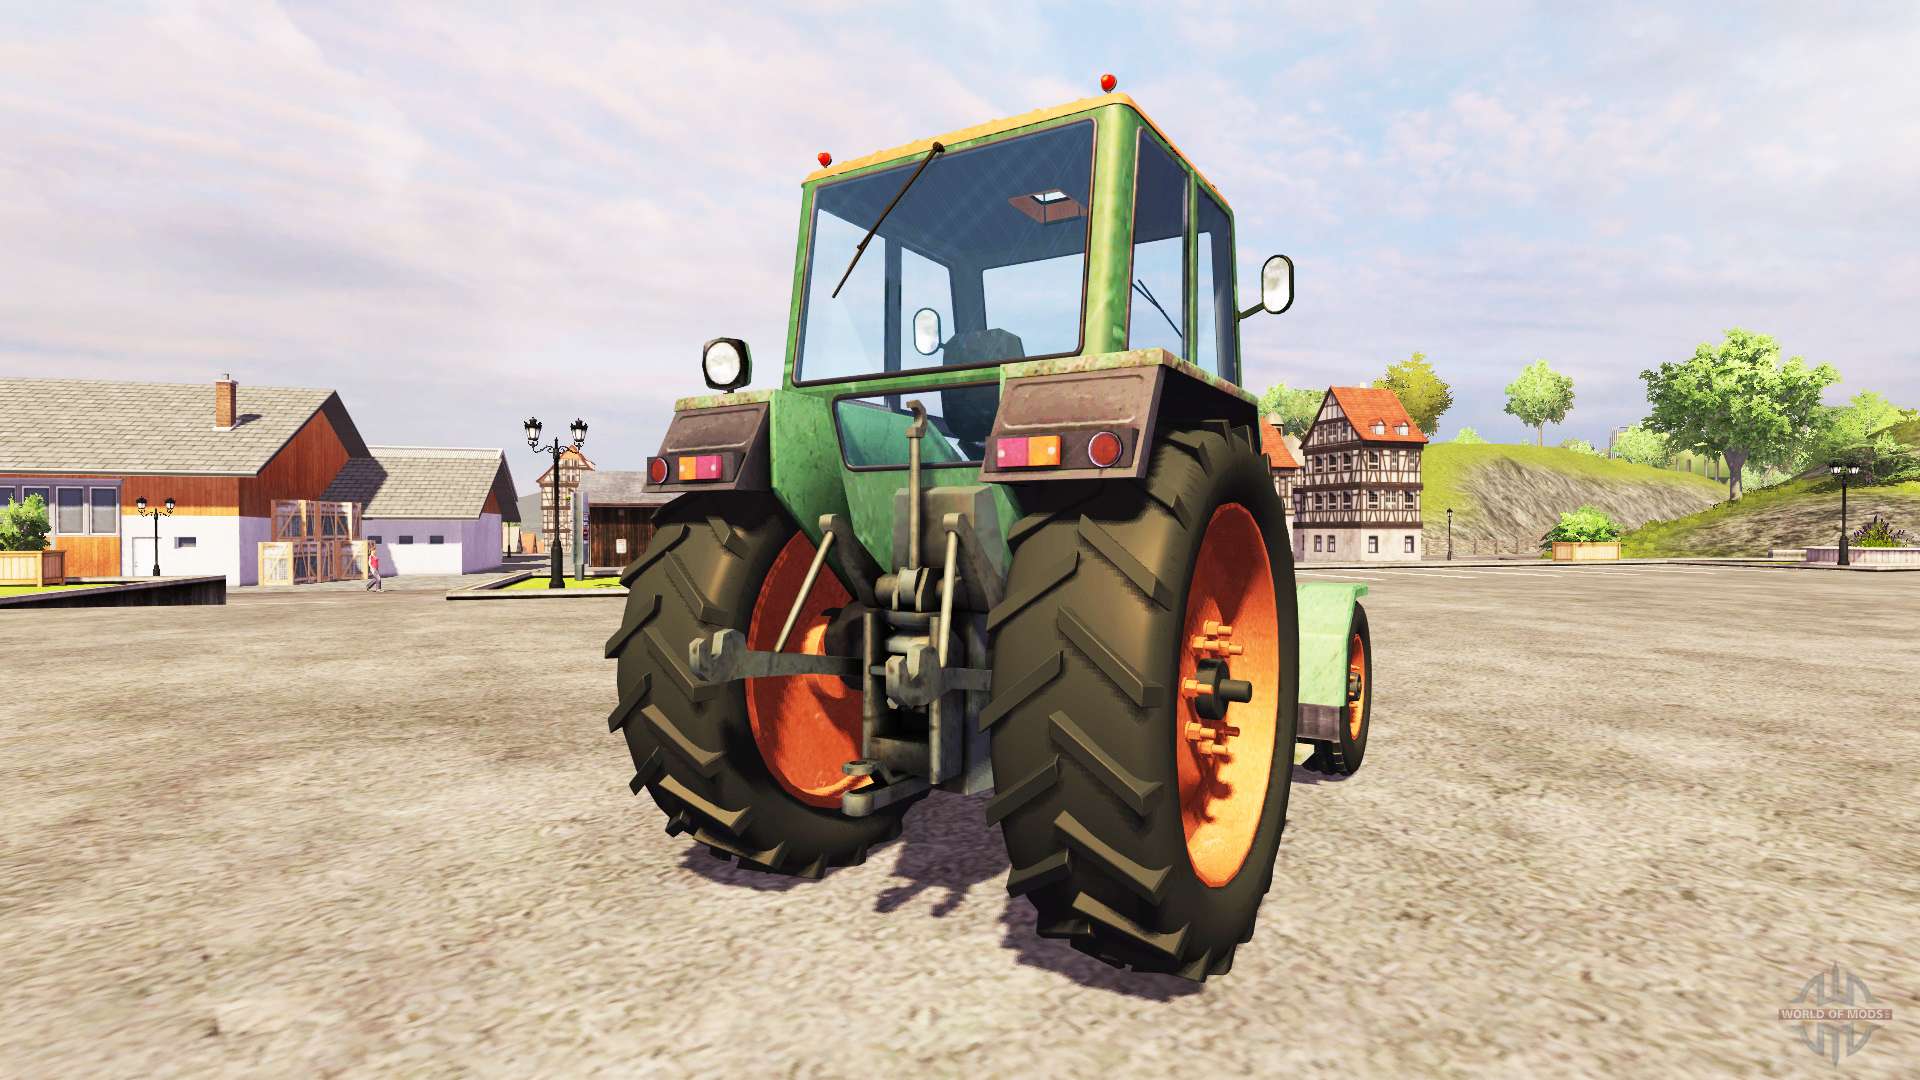 farming simulator 2013